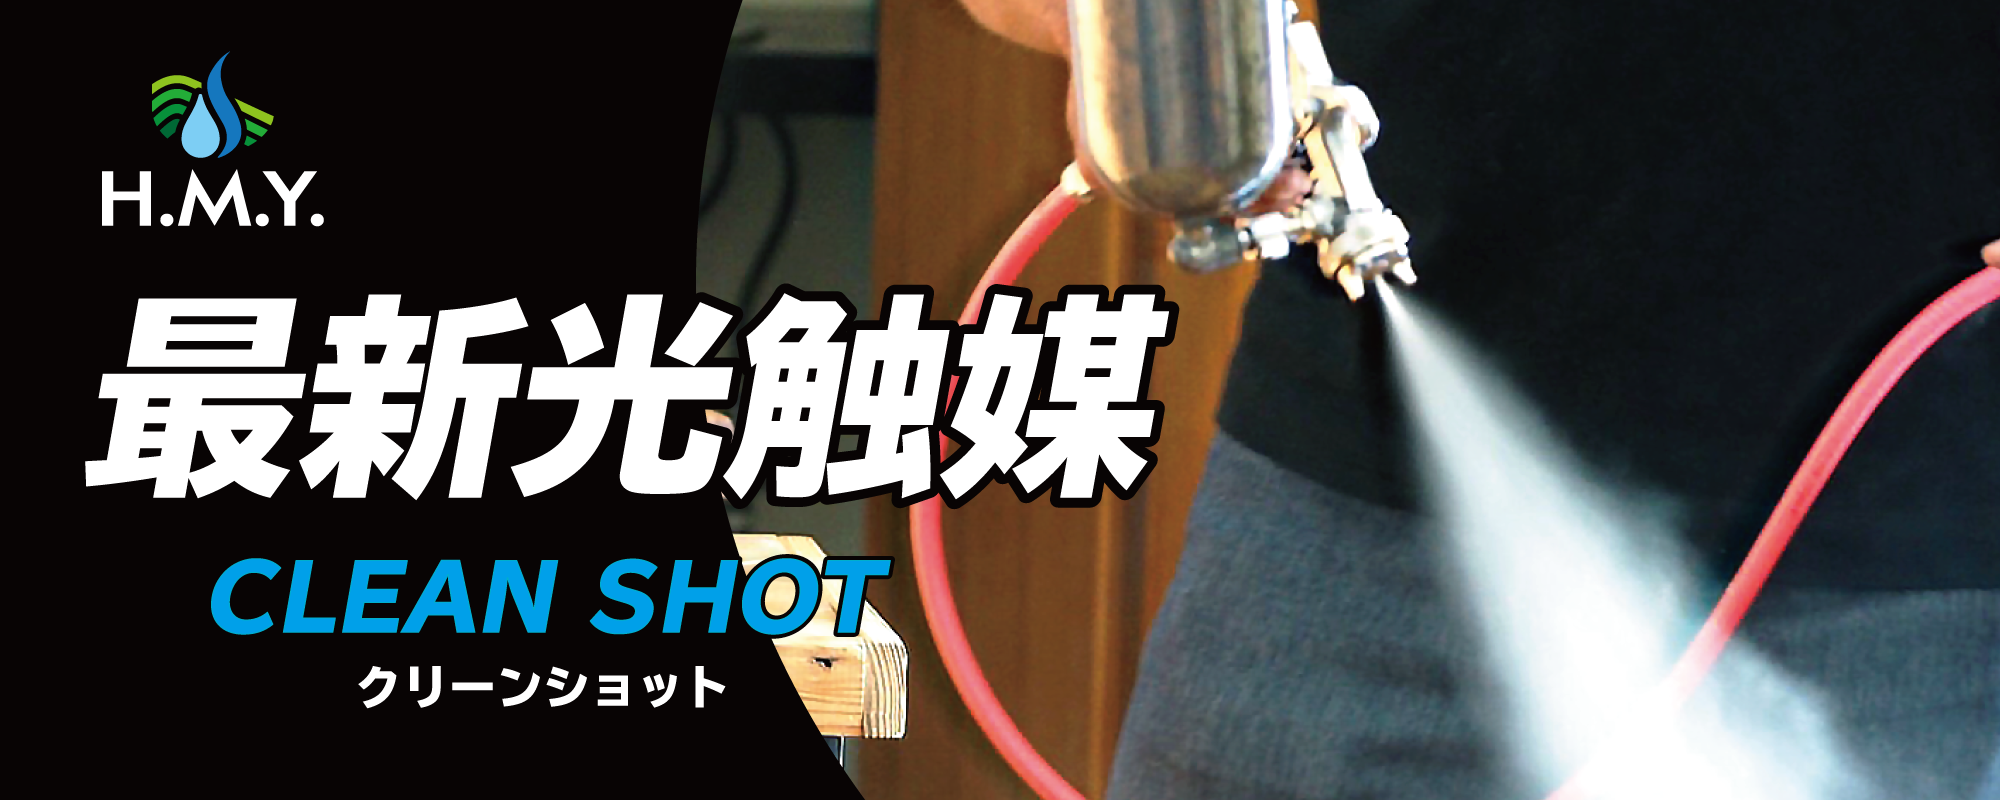 CLEAN SHOT｜光触媒のハイブリッド抗菌剤｜株式会社H.M.Y.